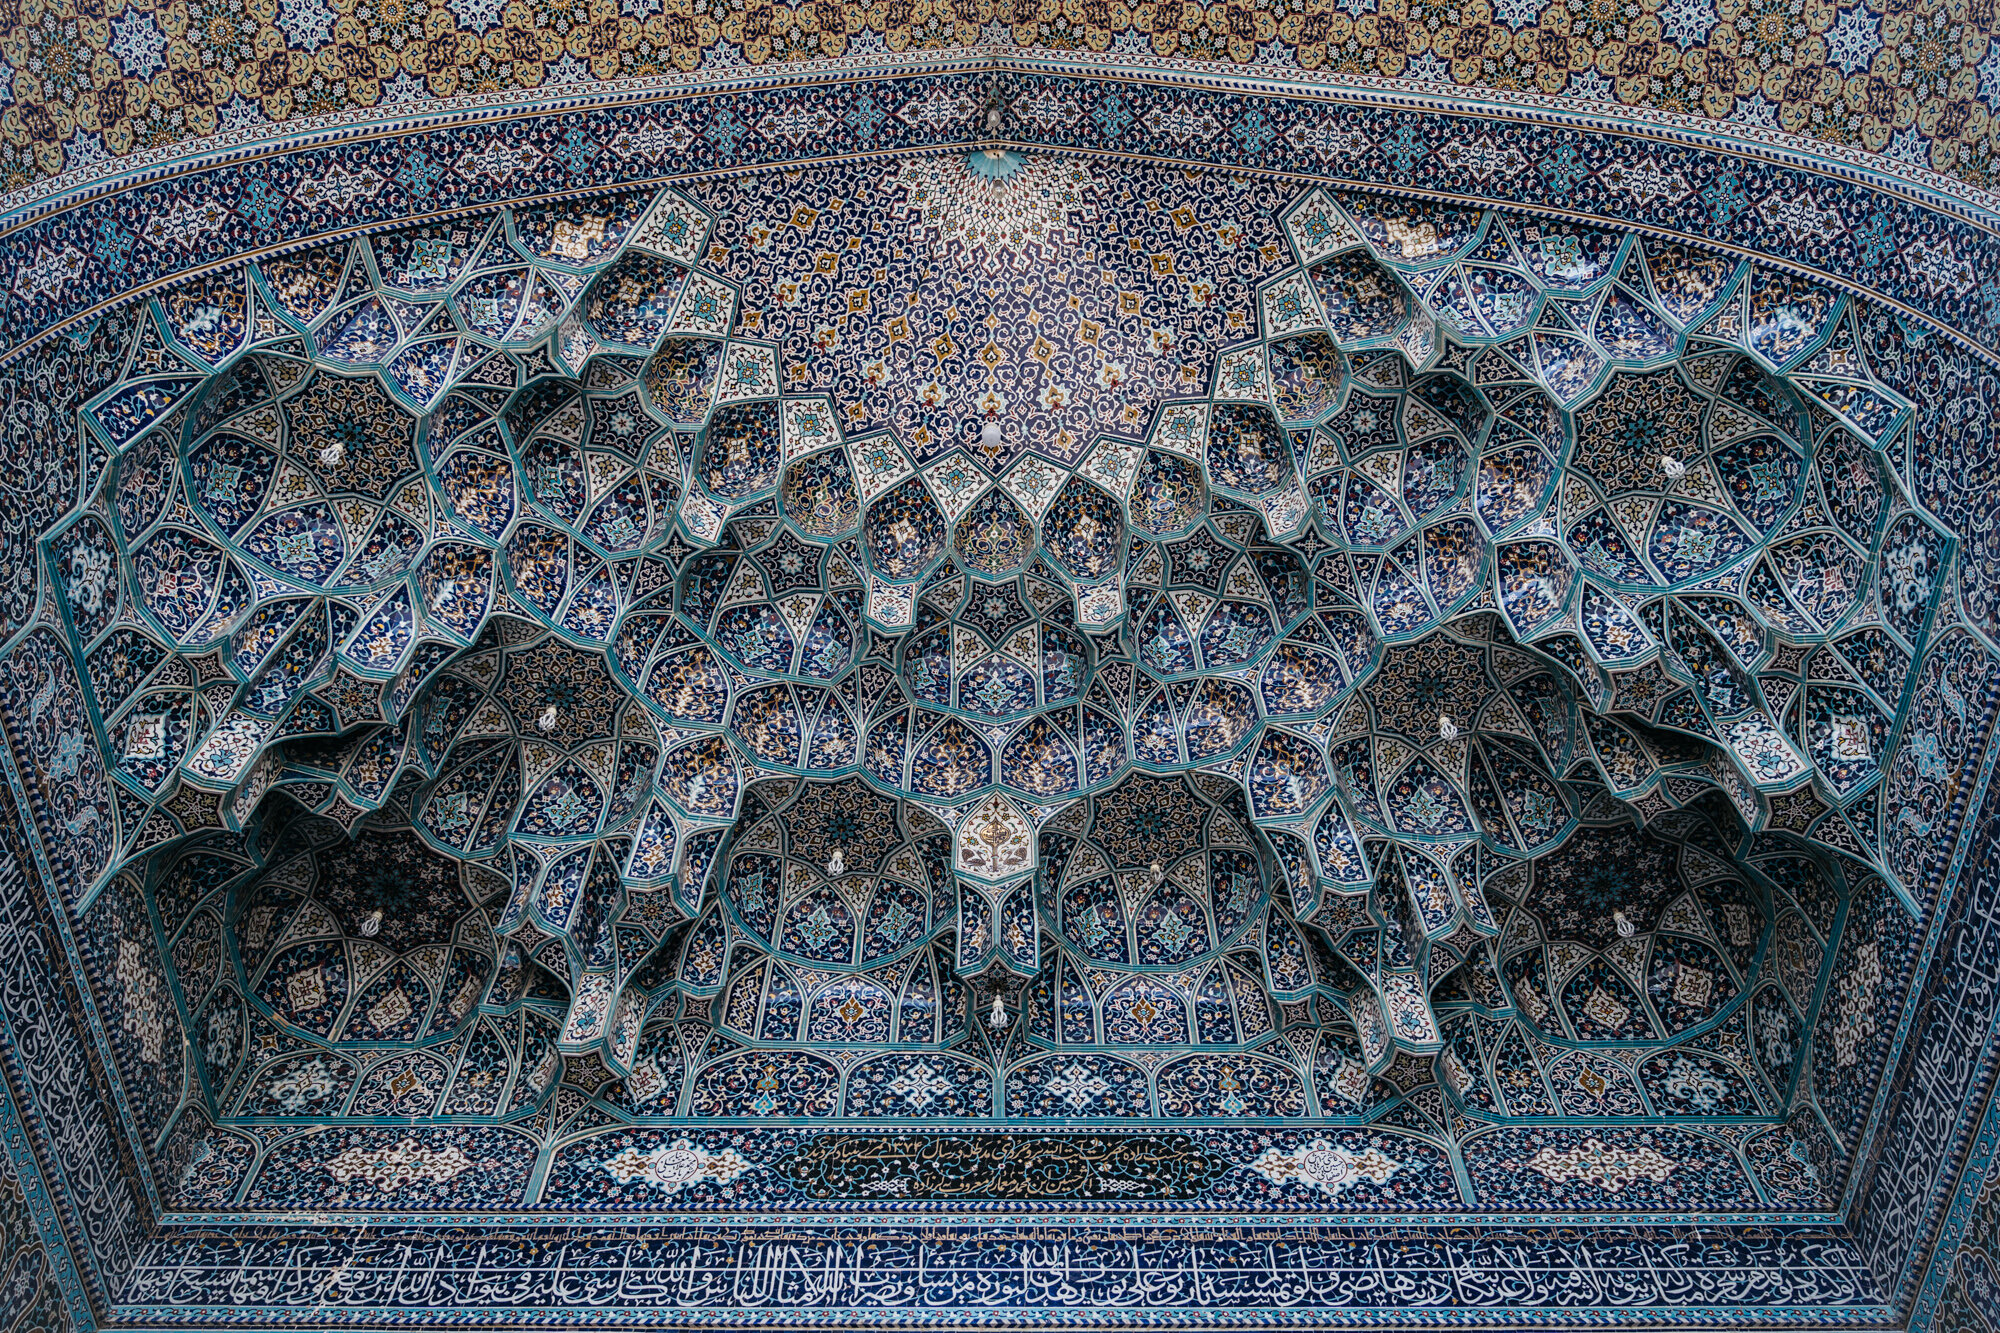  Ceiling details from the Shrine of Fatima Masumeh, Qom 